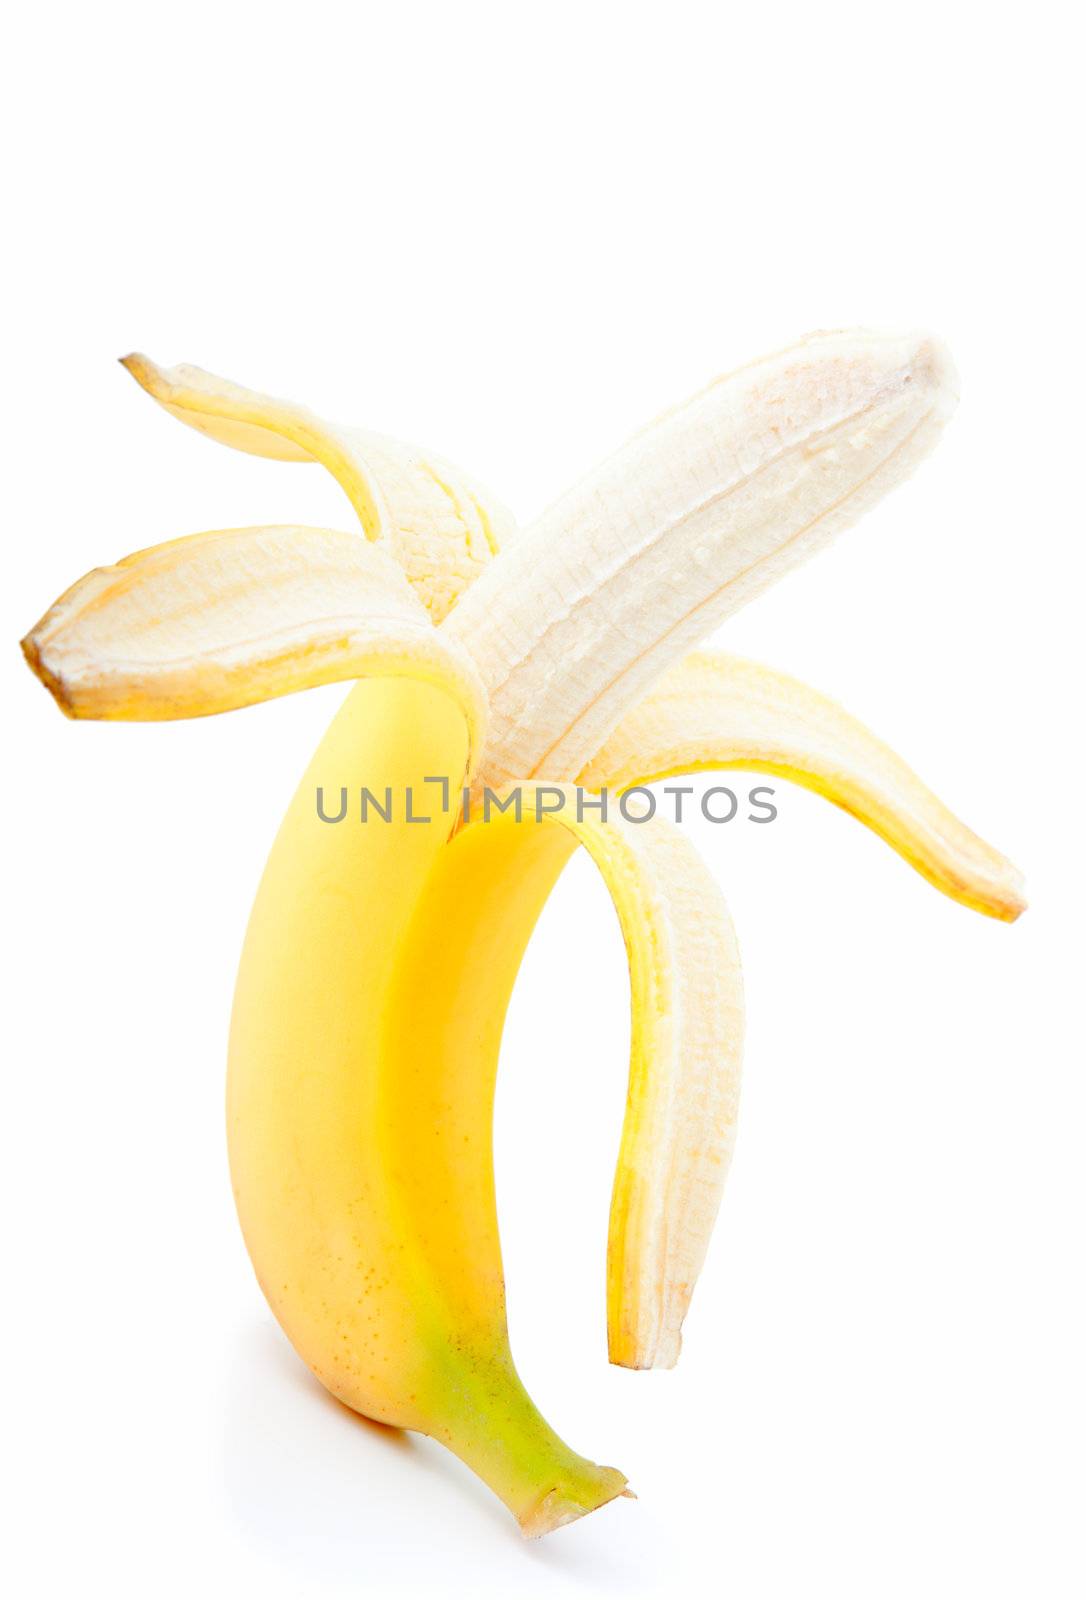 banana on a white background 